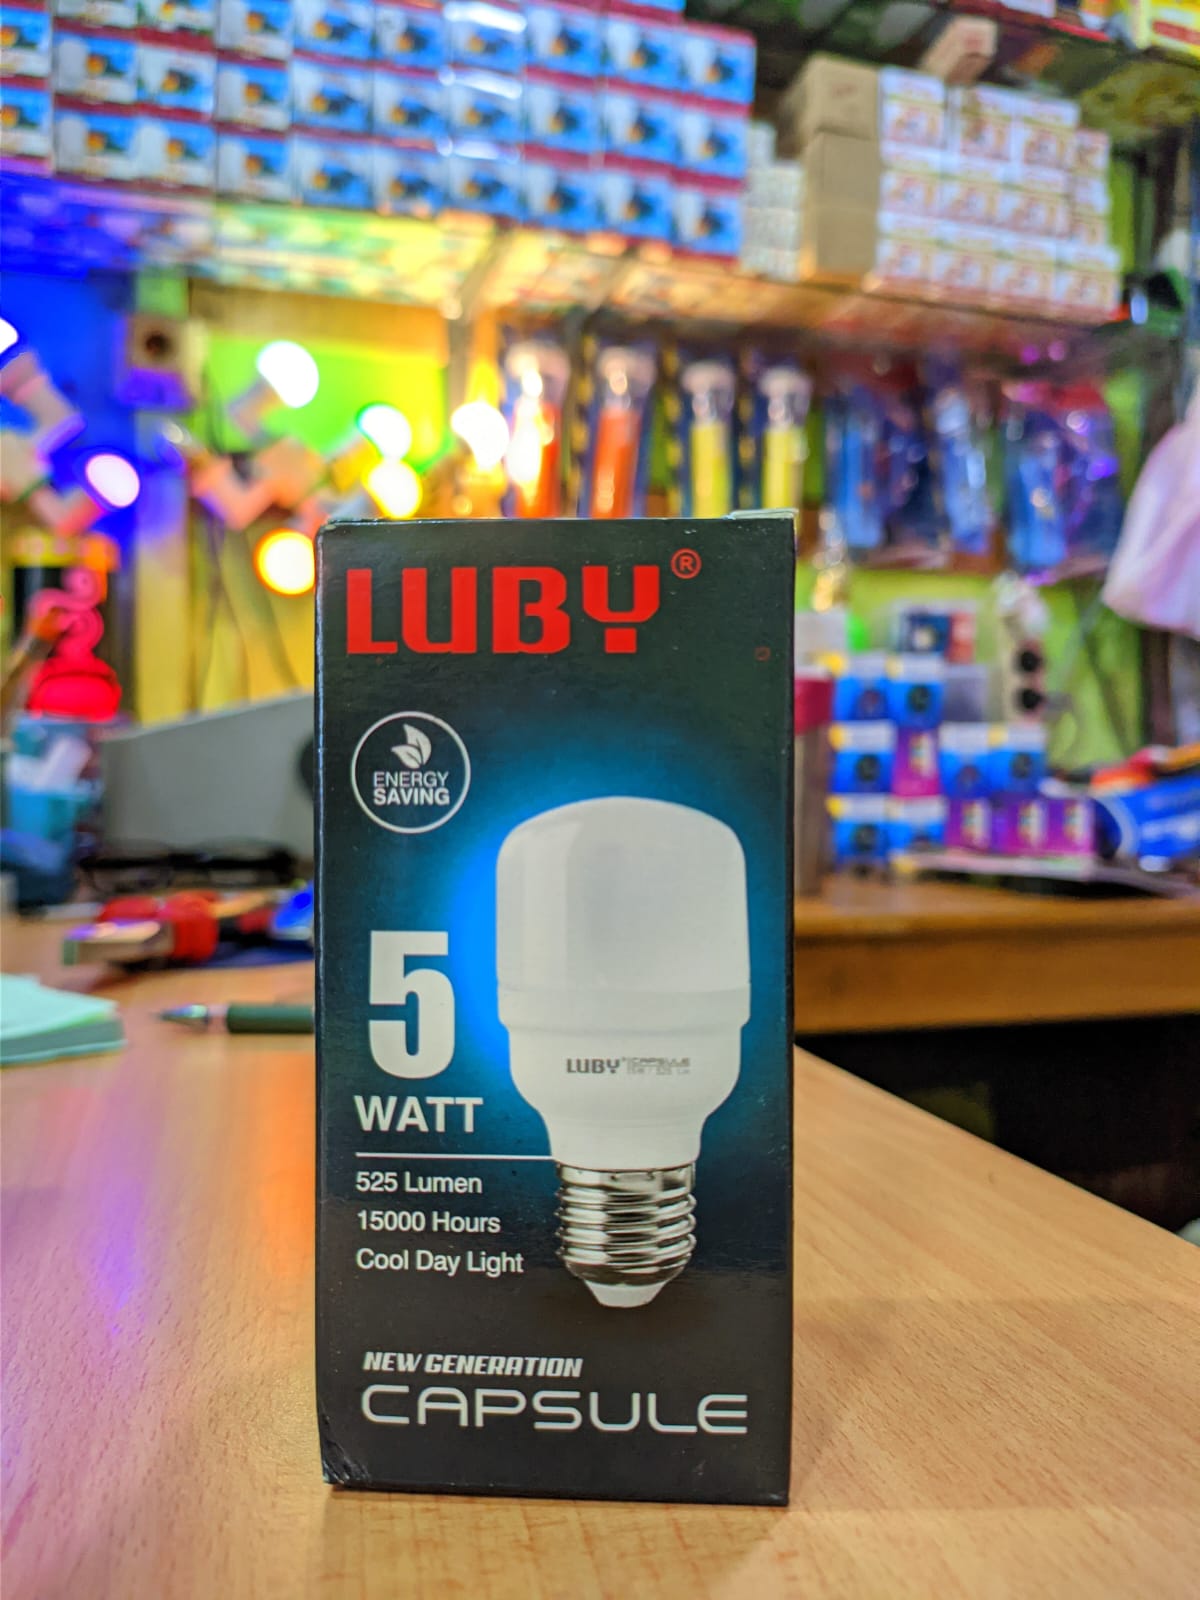 LAMPU LED LUBY CAPSULE 5 WATT